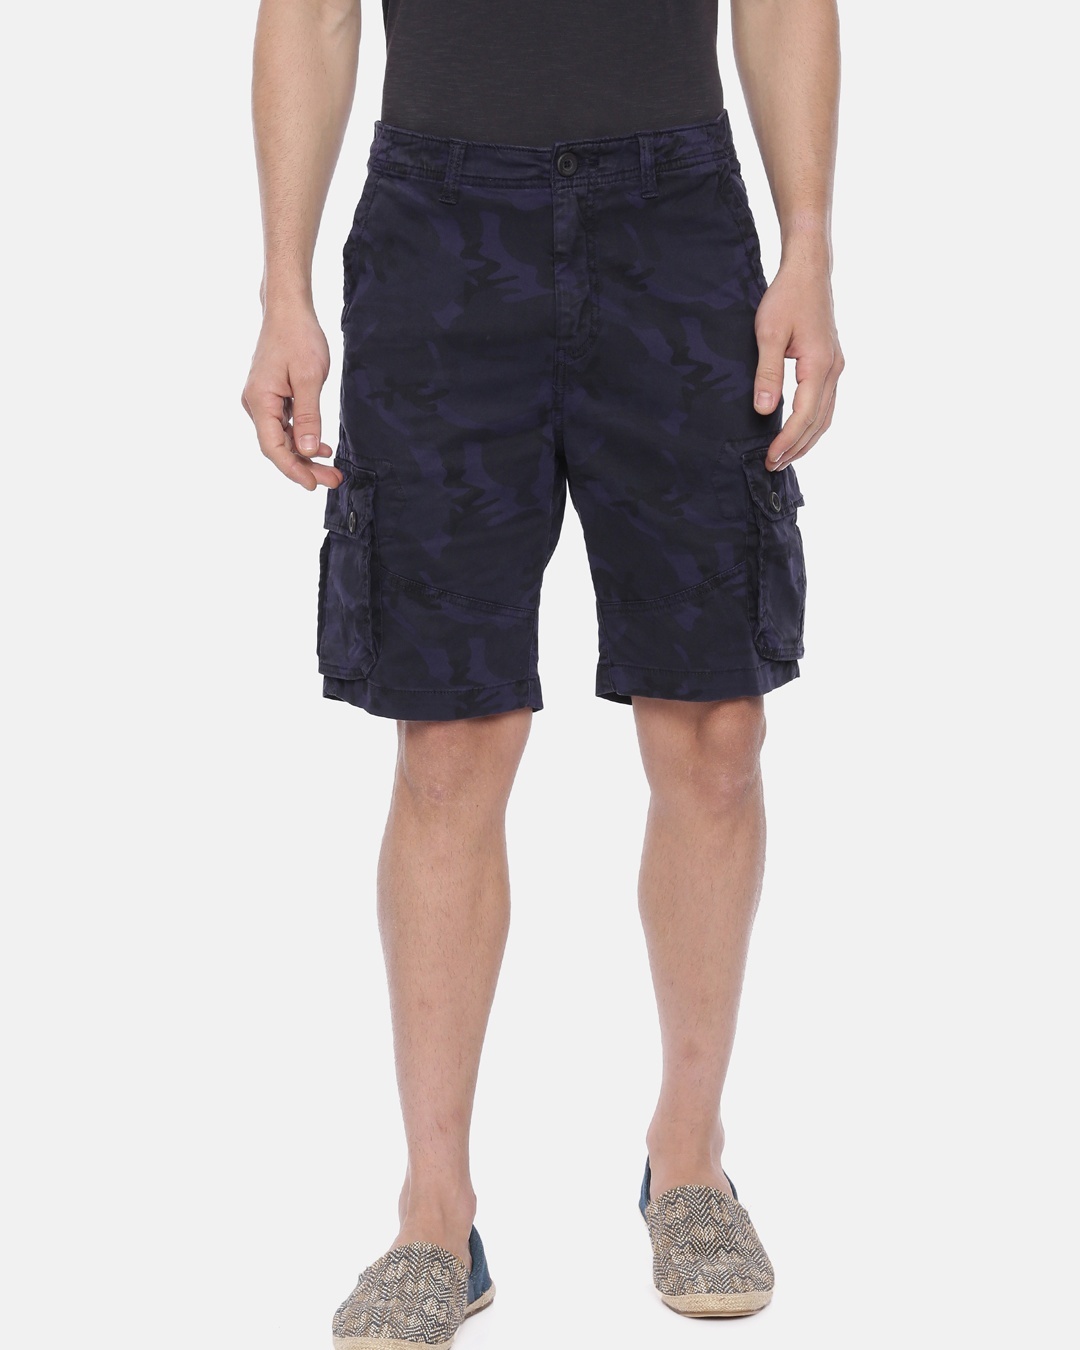 Buy Men's Blue Self Design Slim Fit Shorts for Men Blue Online at Bewakoof